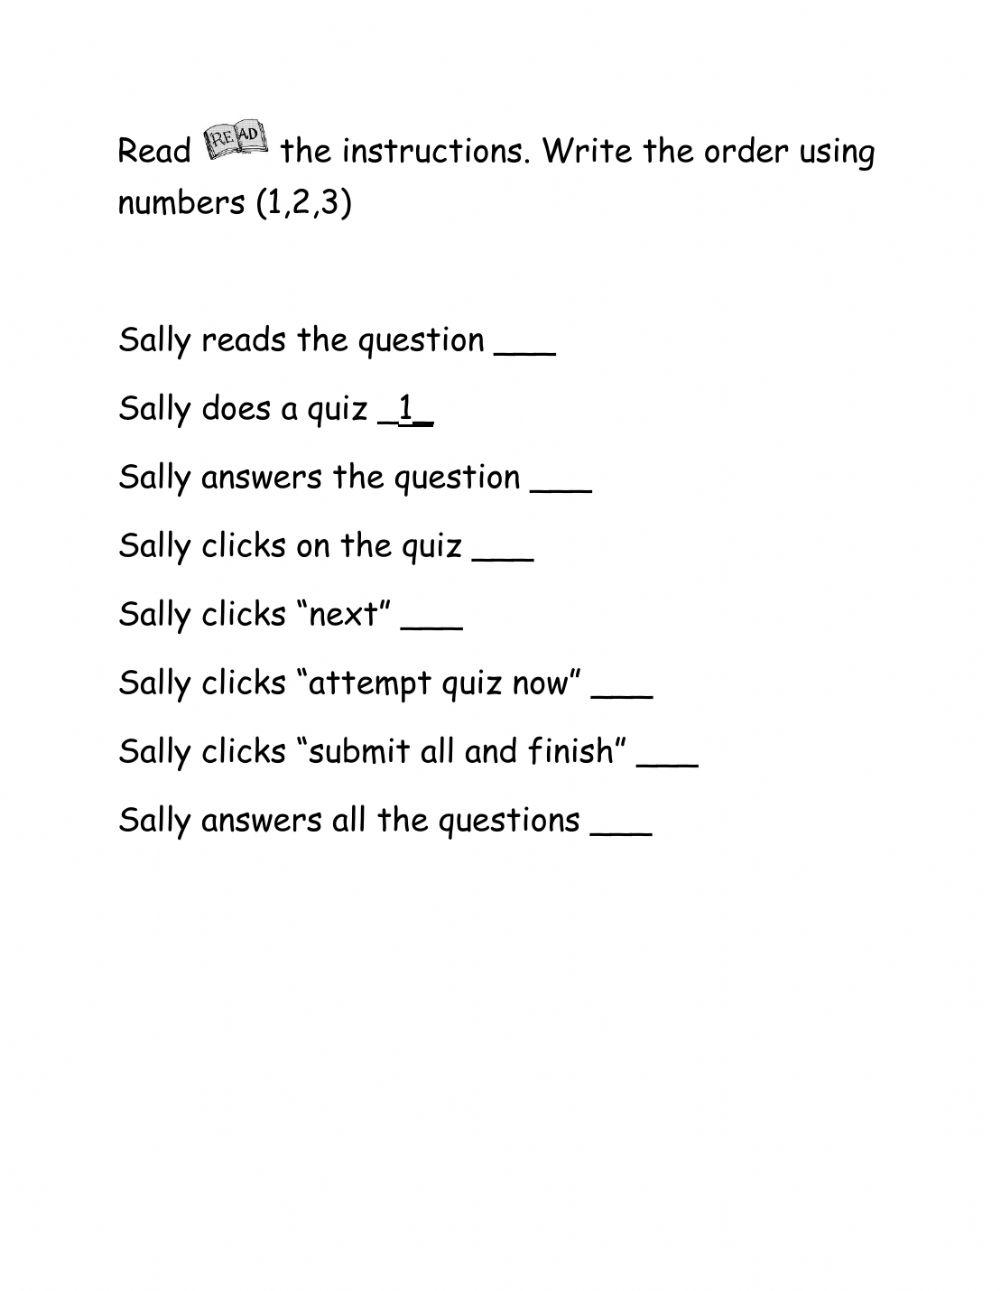 Story: Sally follows instructions 1